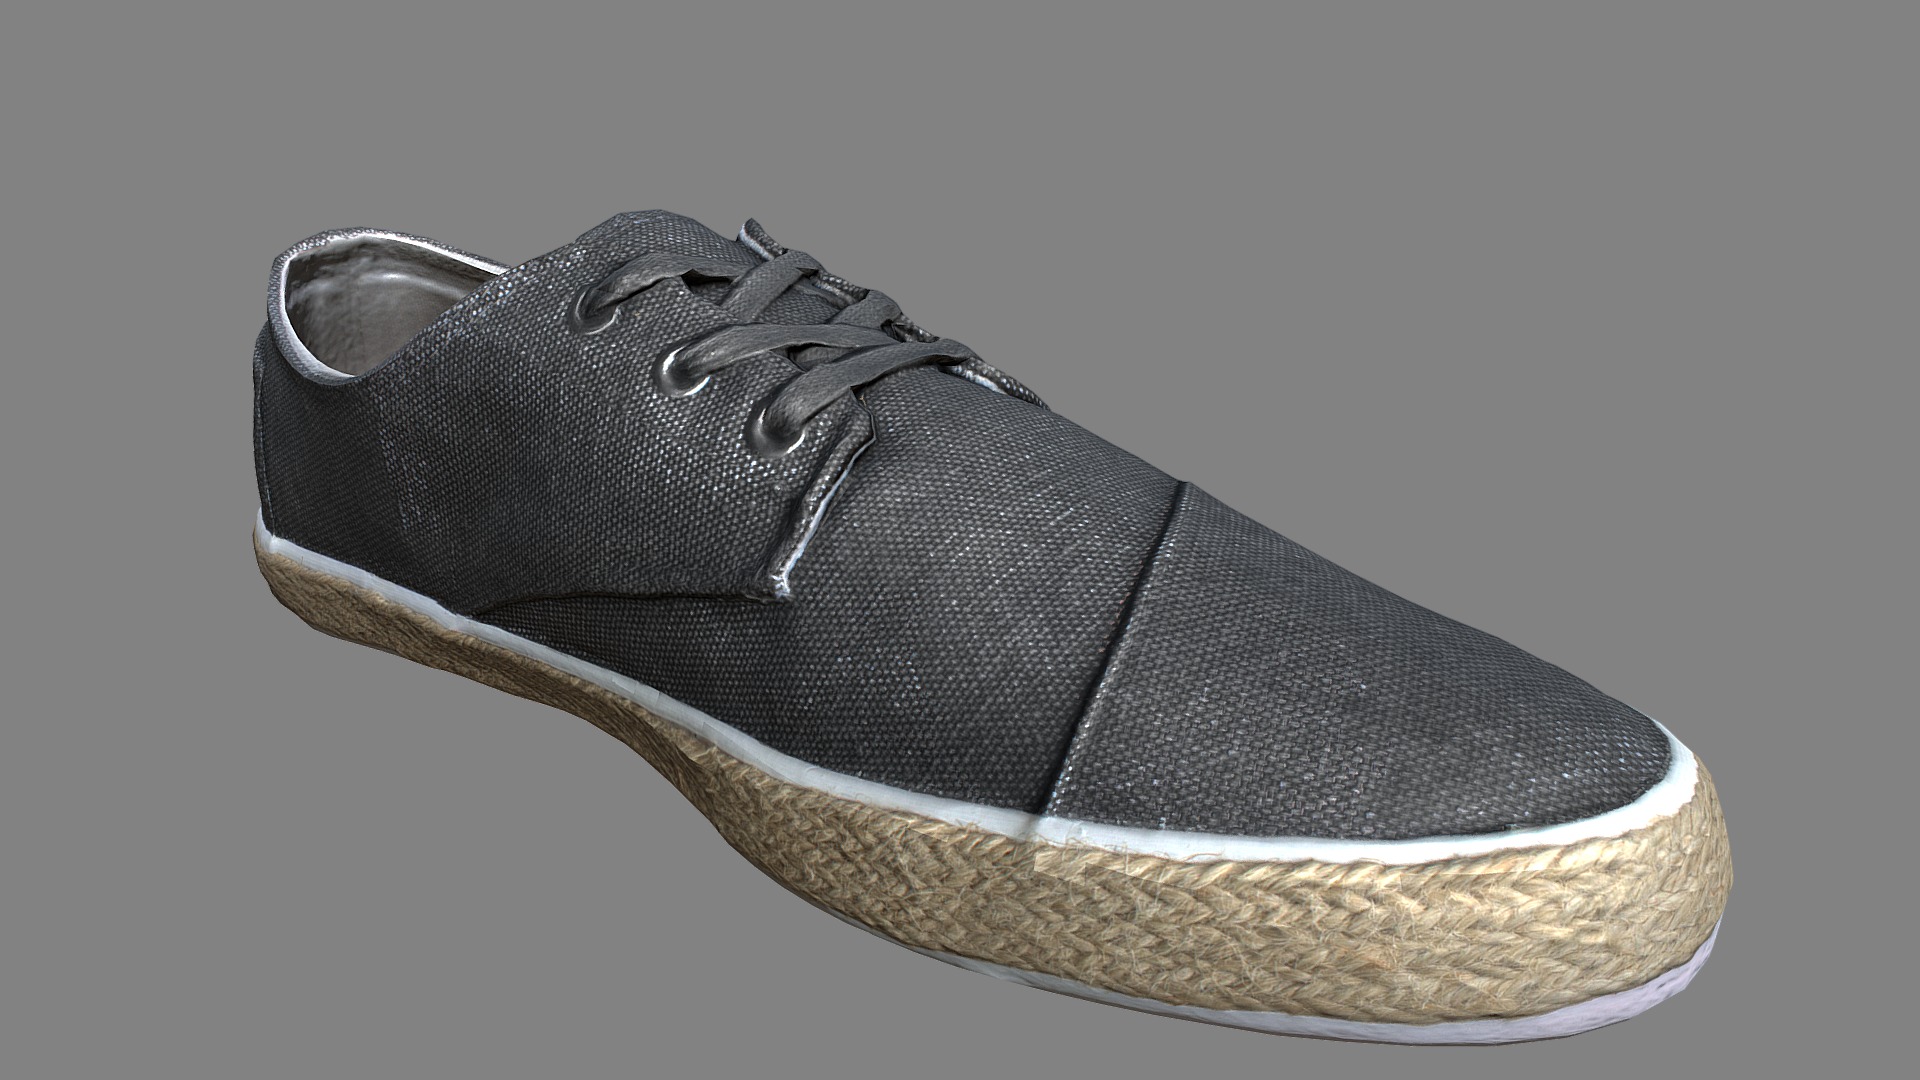 3D model Shoe low poly 3D model - This is a 3D model of the Shoe low poly 3D model. The 3D model is about a brown leather shoe.